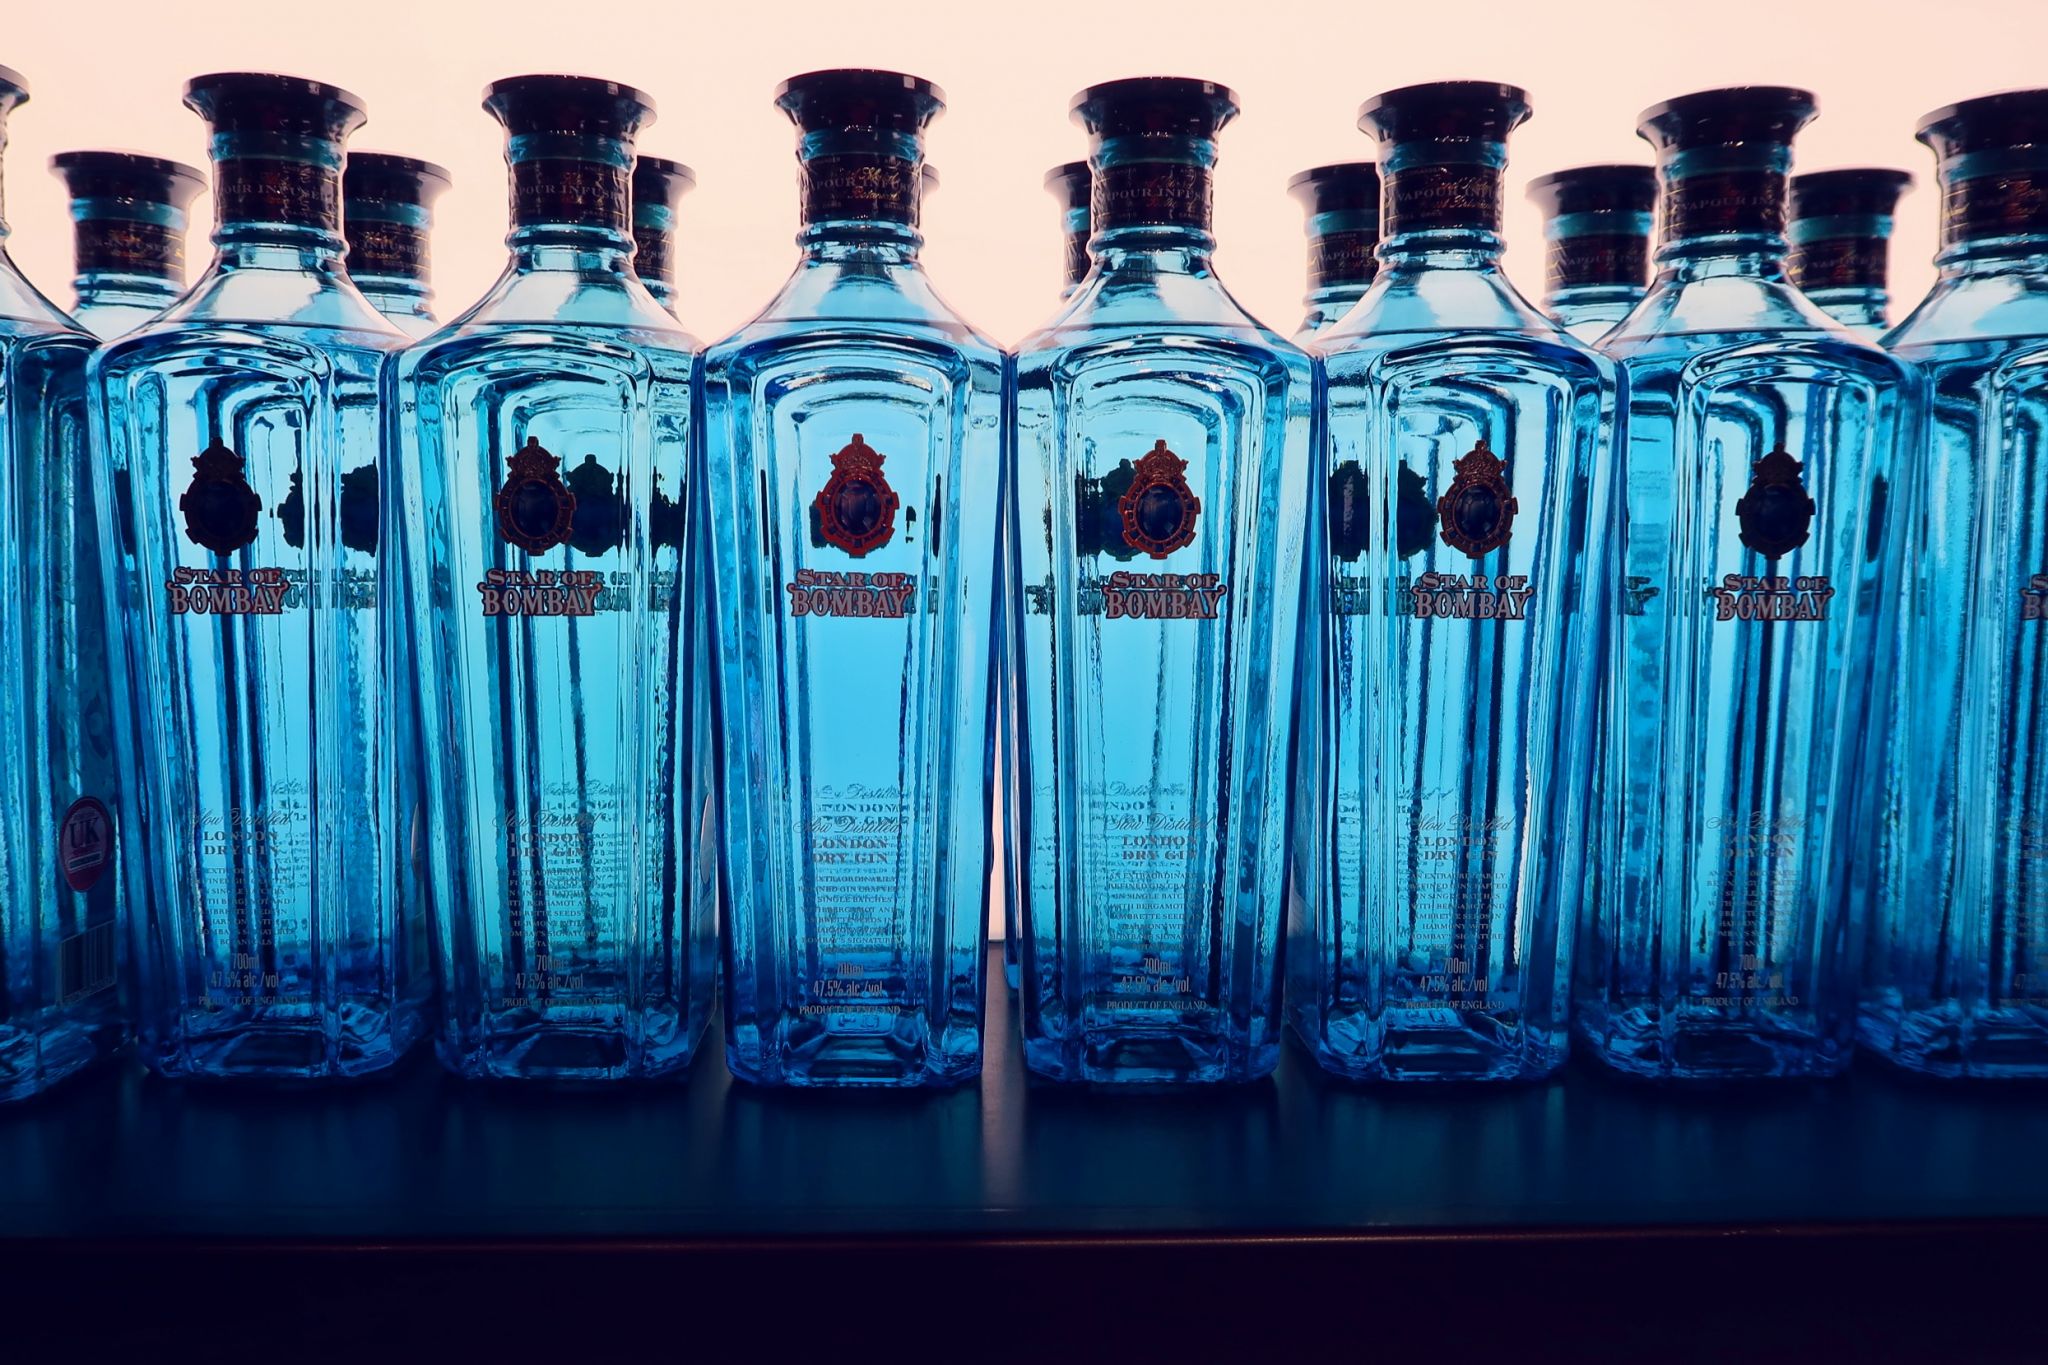 Bombay Sapphire Distillery tour @minkaguides Mill Shop bottles